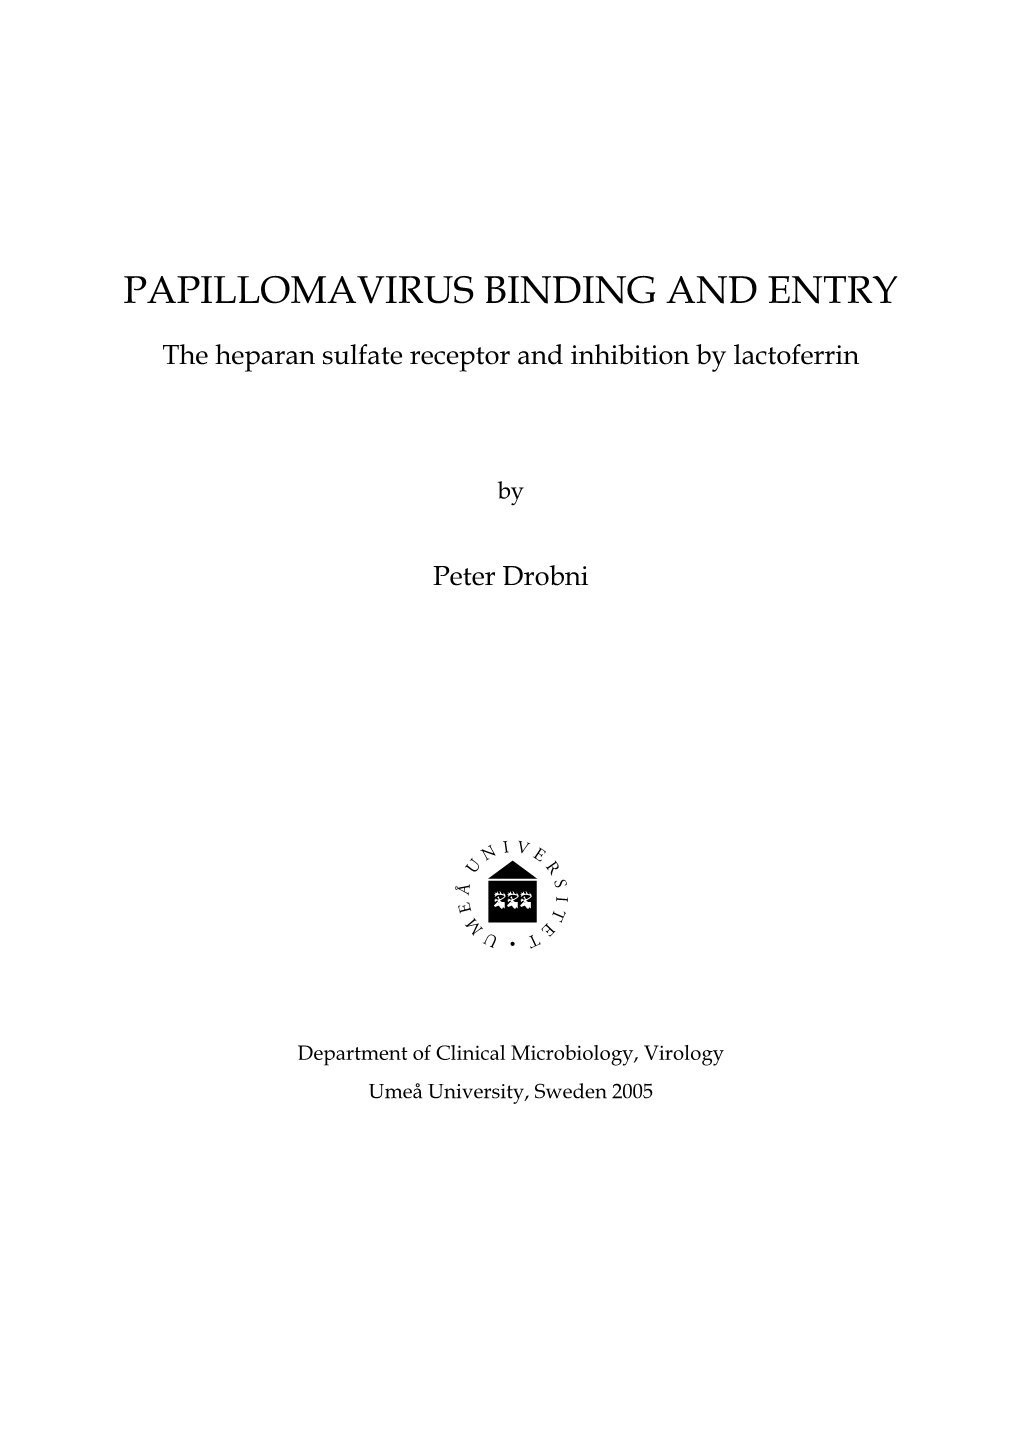 Papillomavirus Binding and Entry